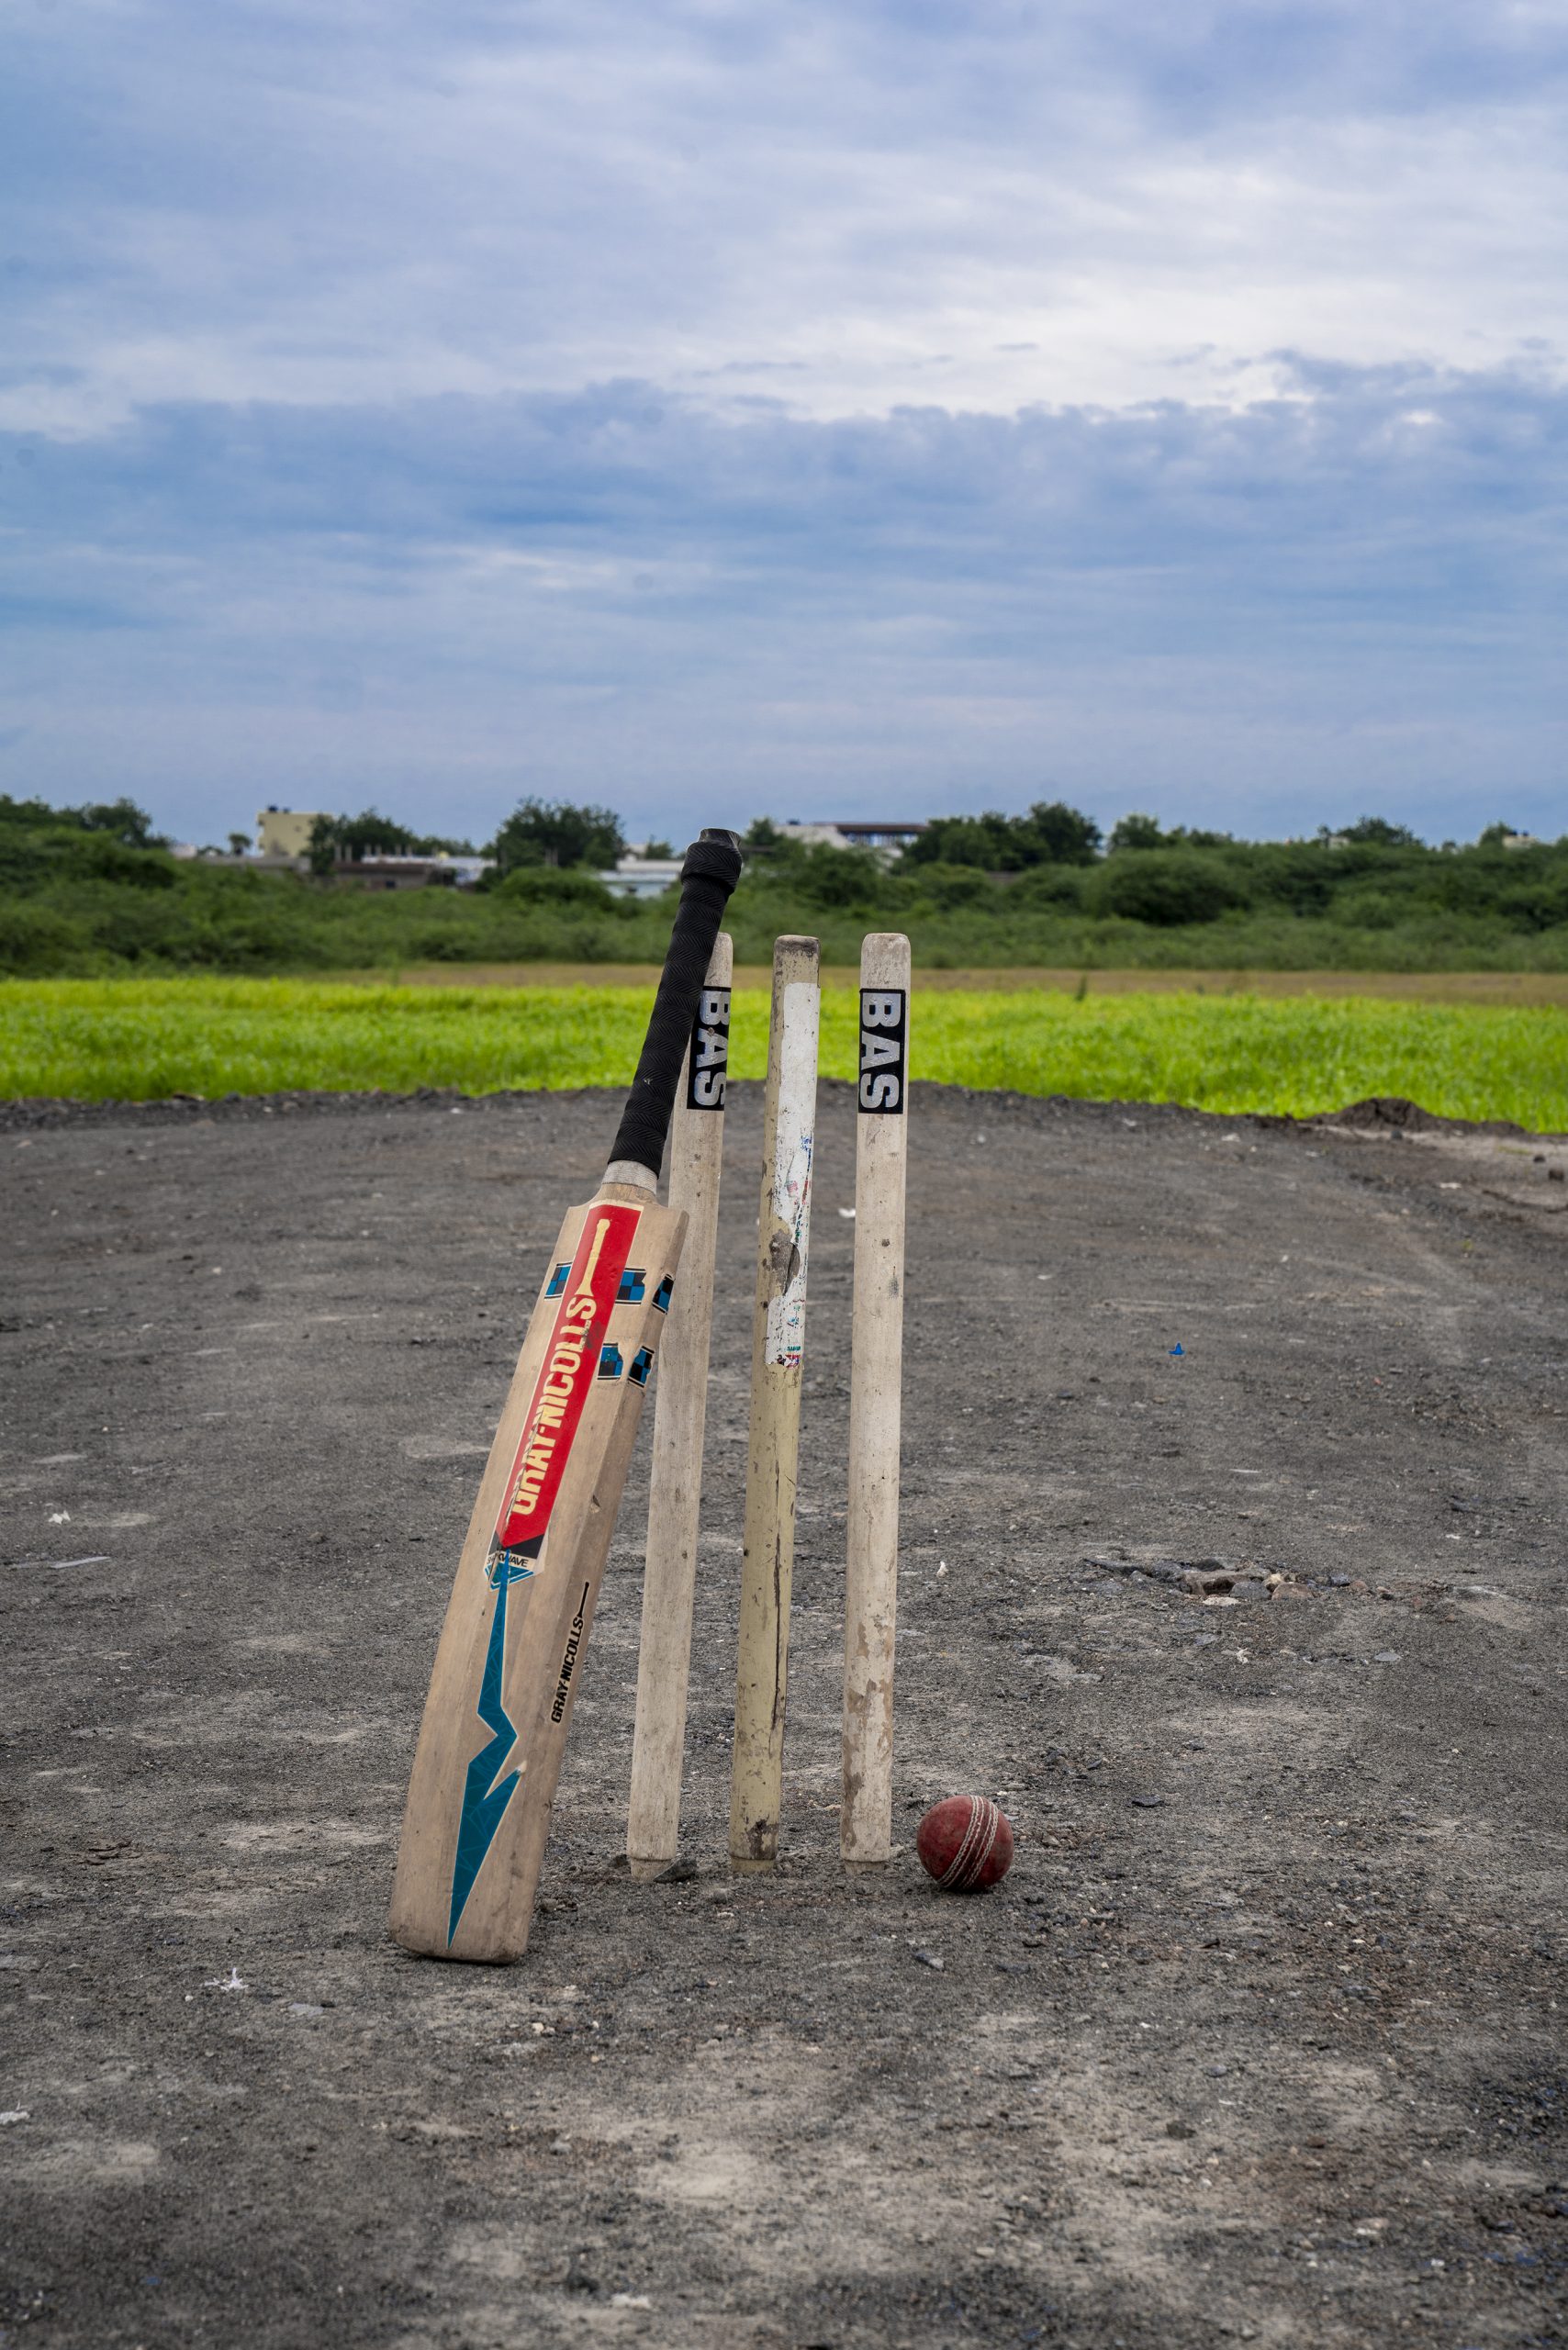 Cricket sports